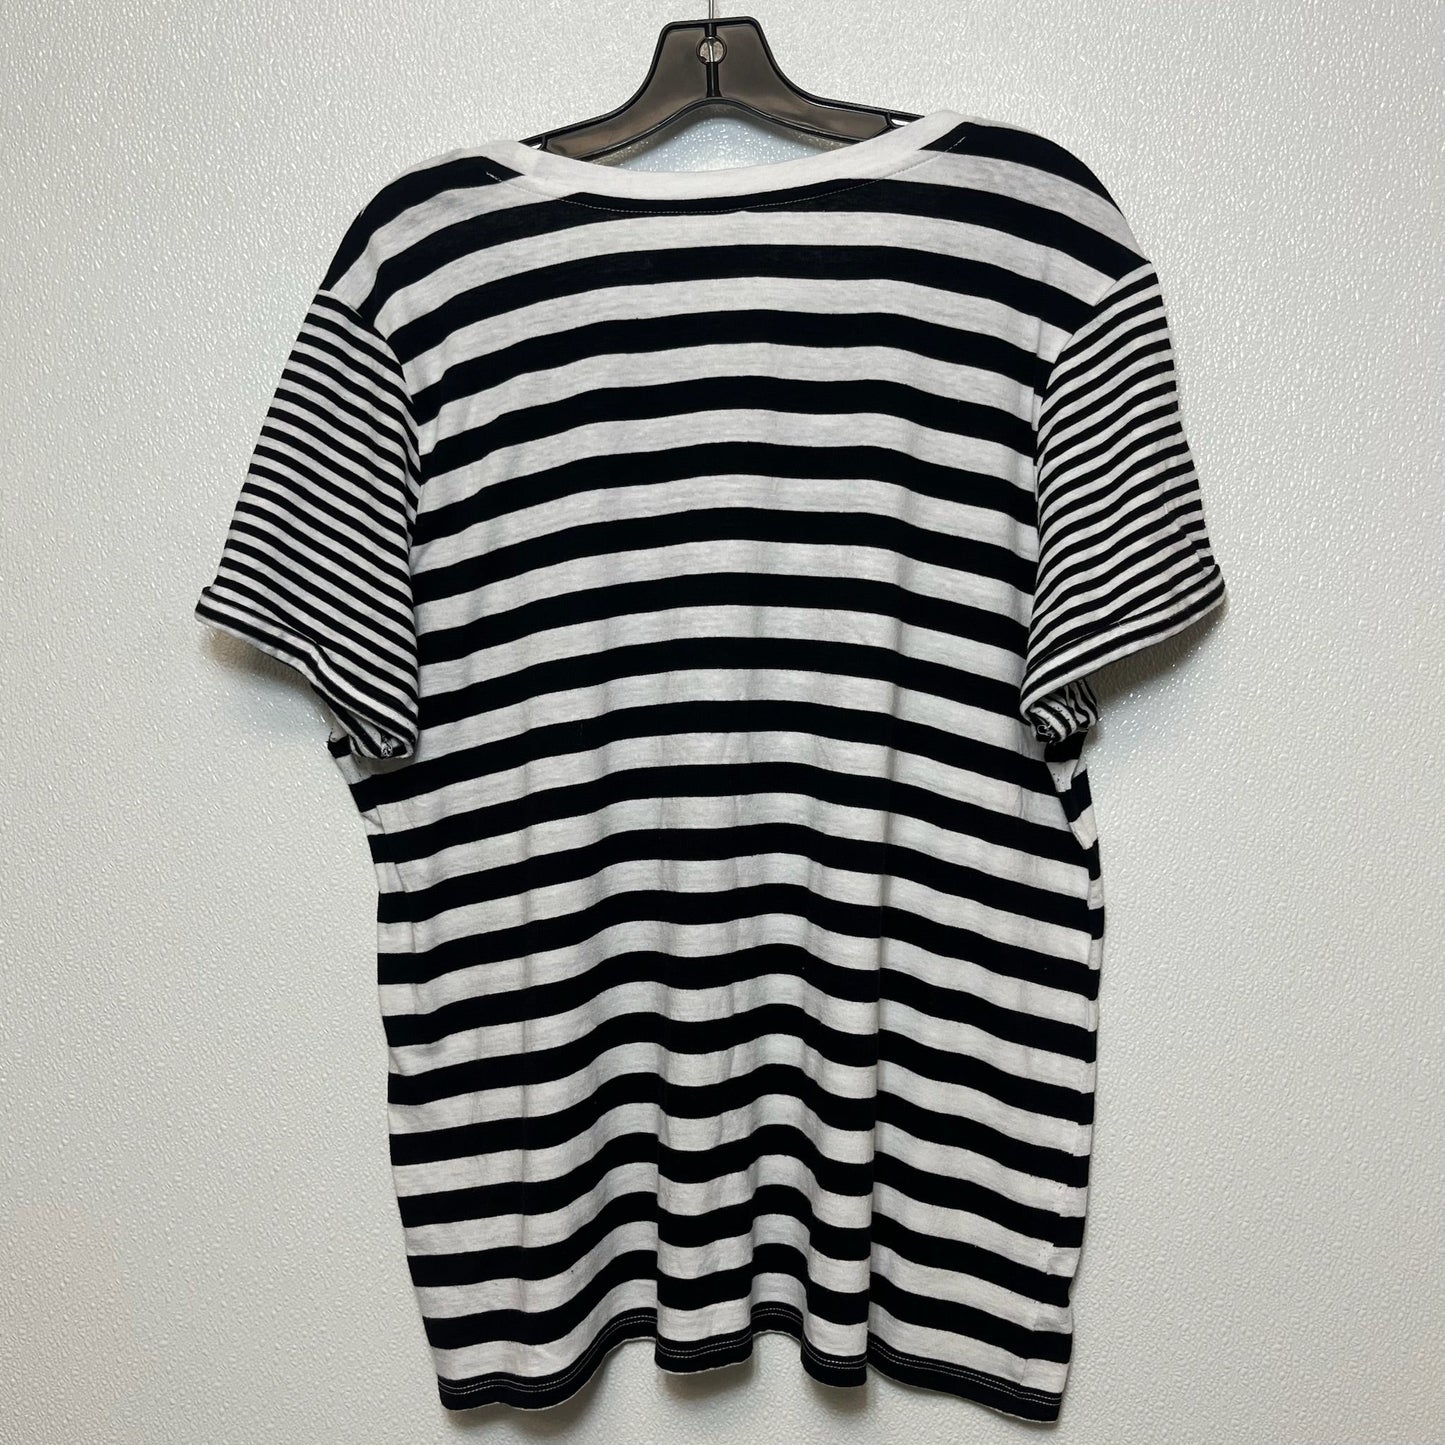 Striped Top Short Sleeve Basic Torrid, Size 2x